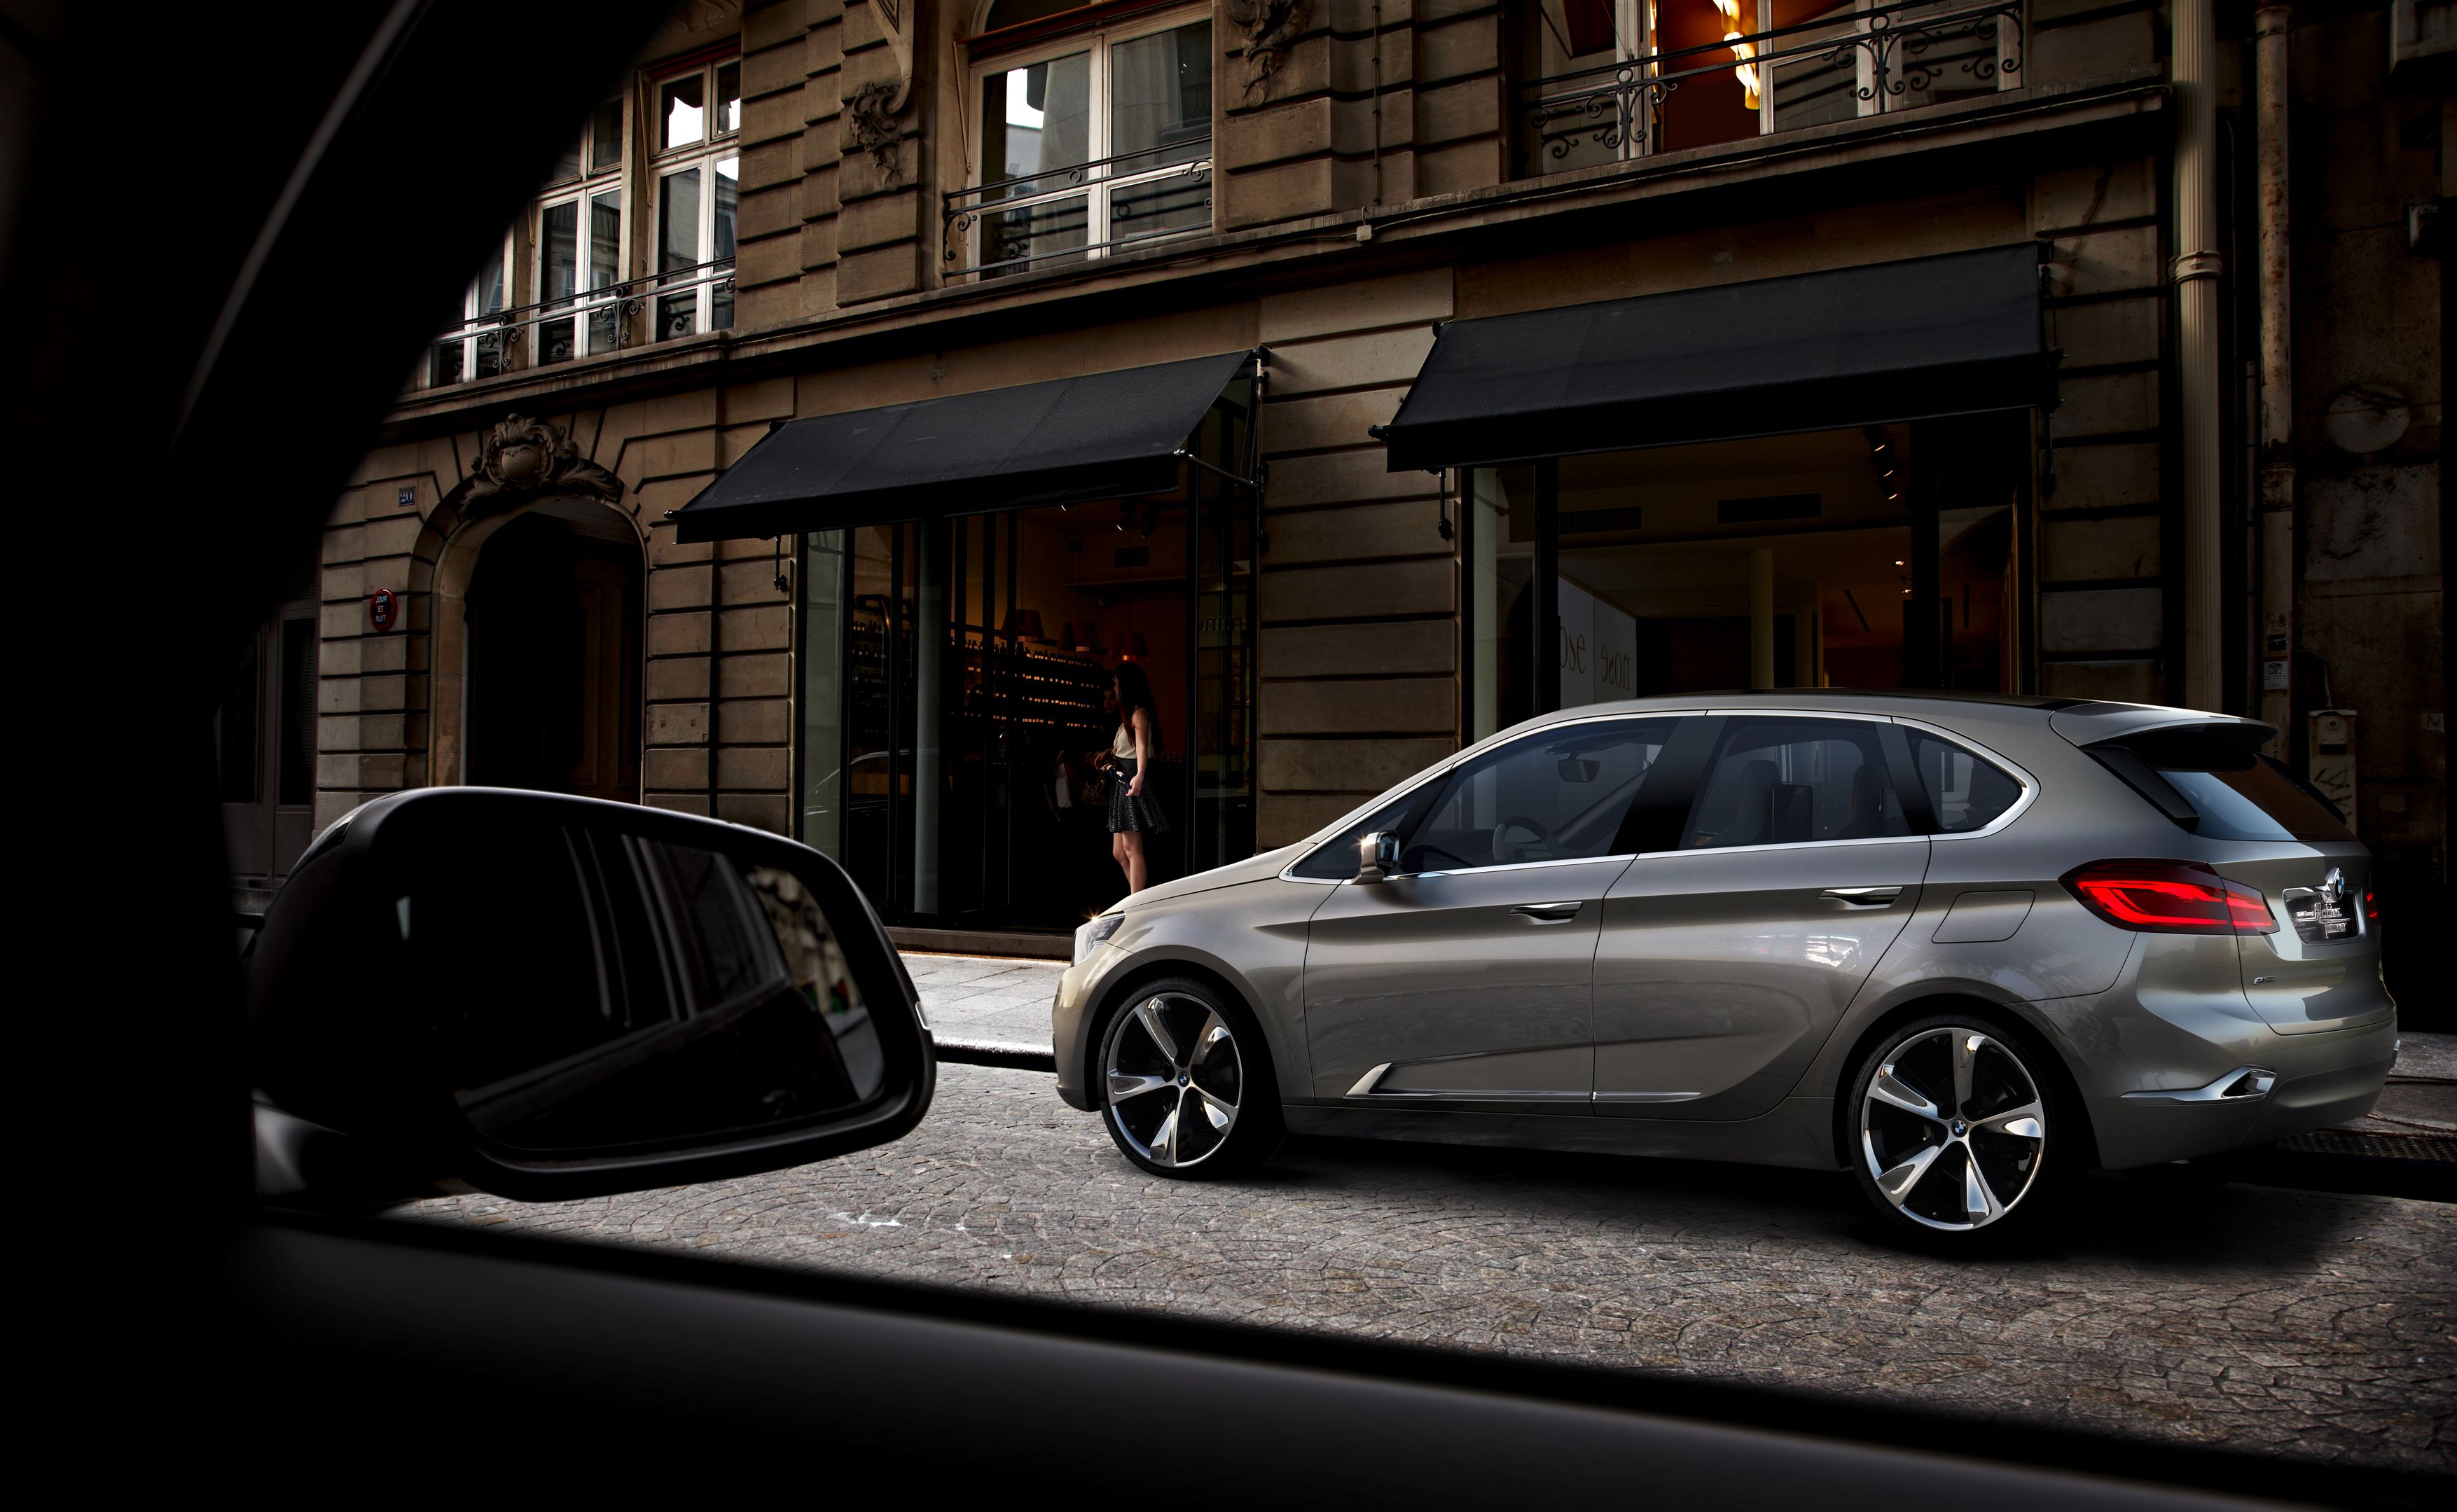 2013 BMW Concept Active Tourer